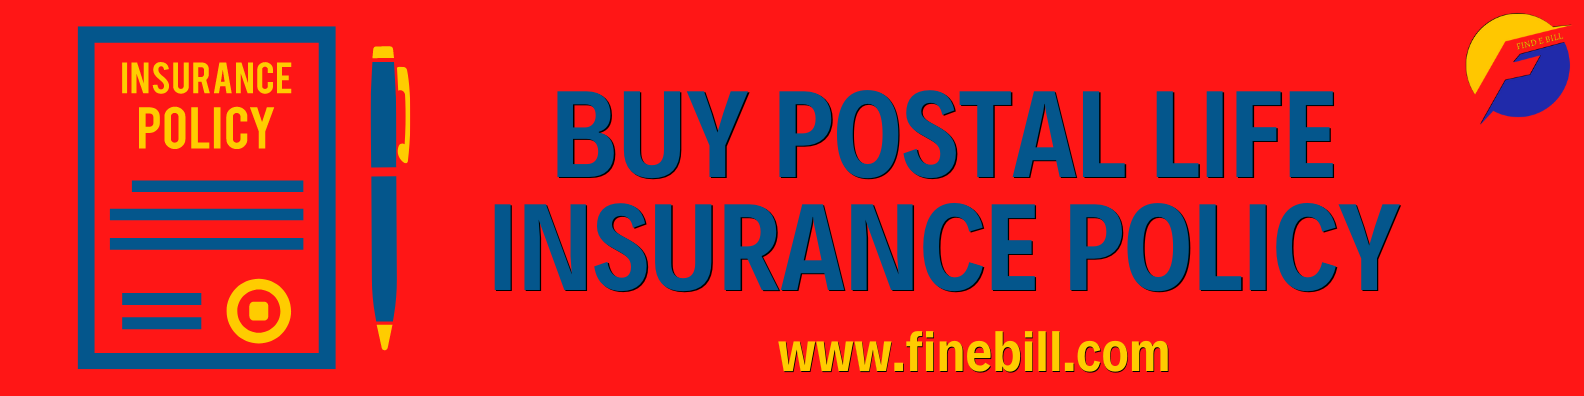 postal life insurance policy 